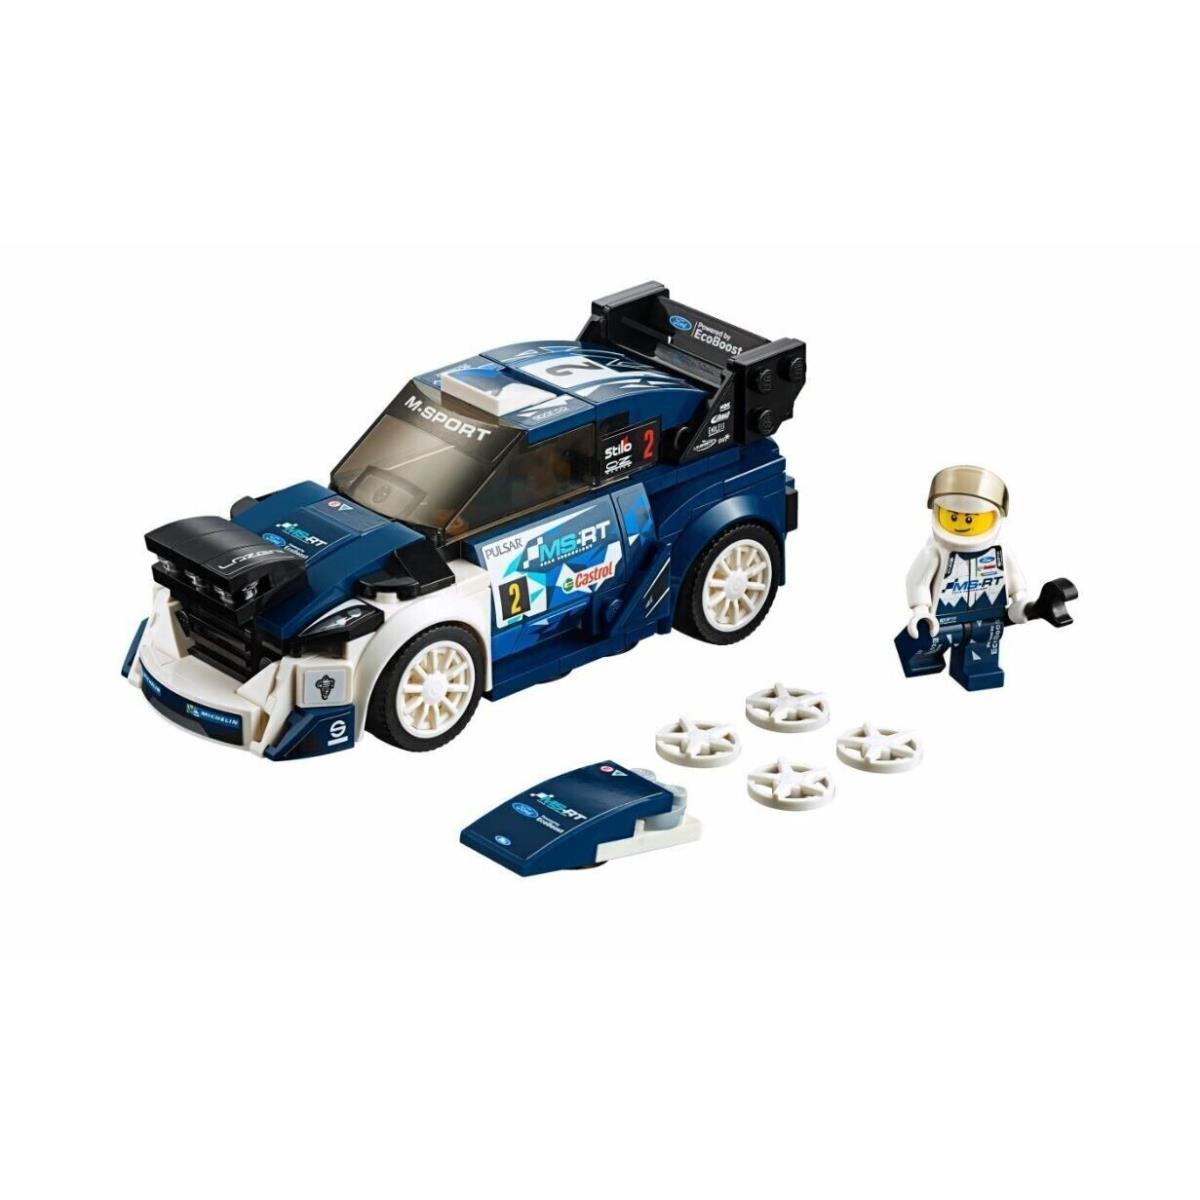 Lego 75885 Speed Champions Ford Fiesta M-sport Wrc 2018 Rally Race Car